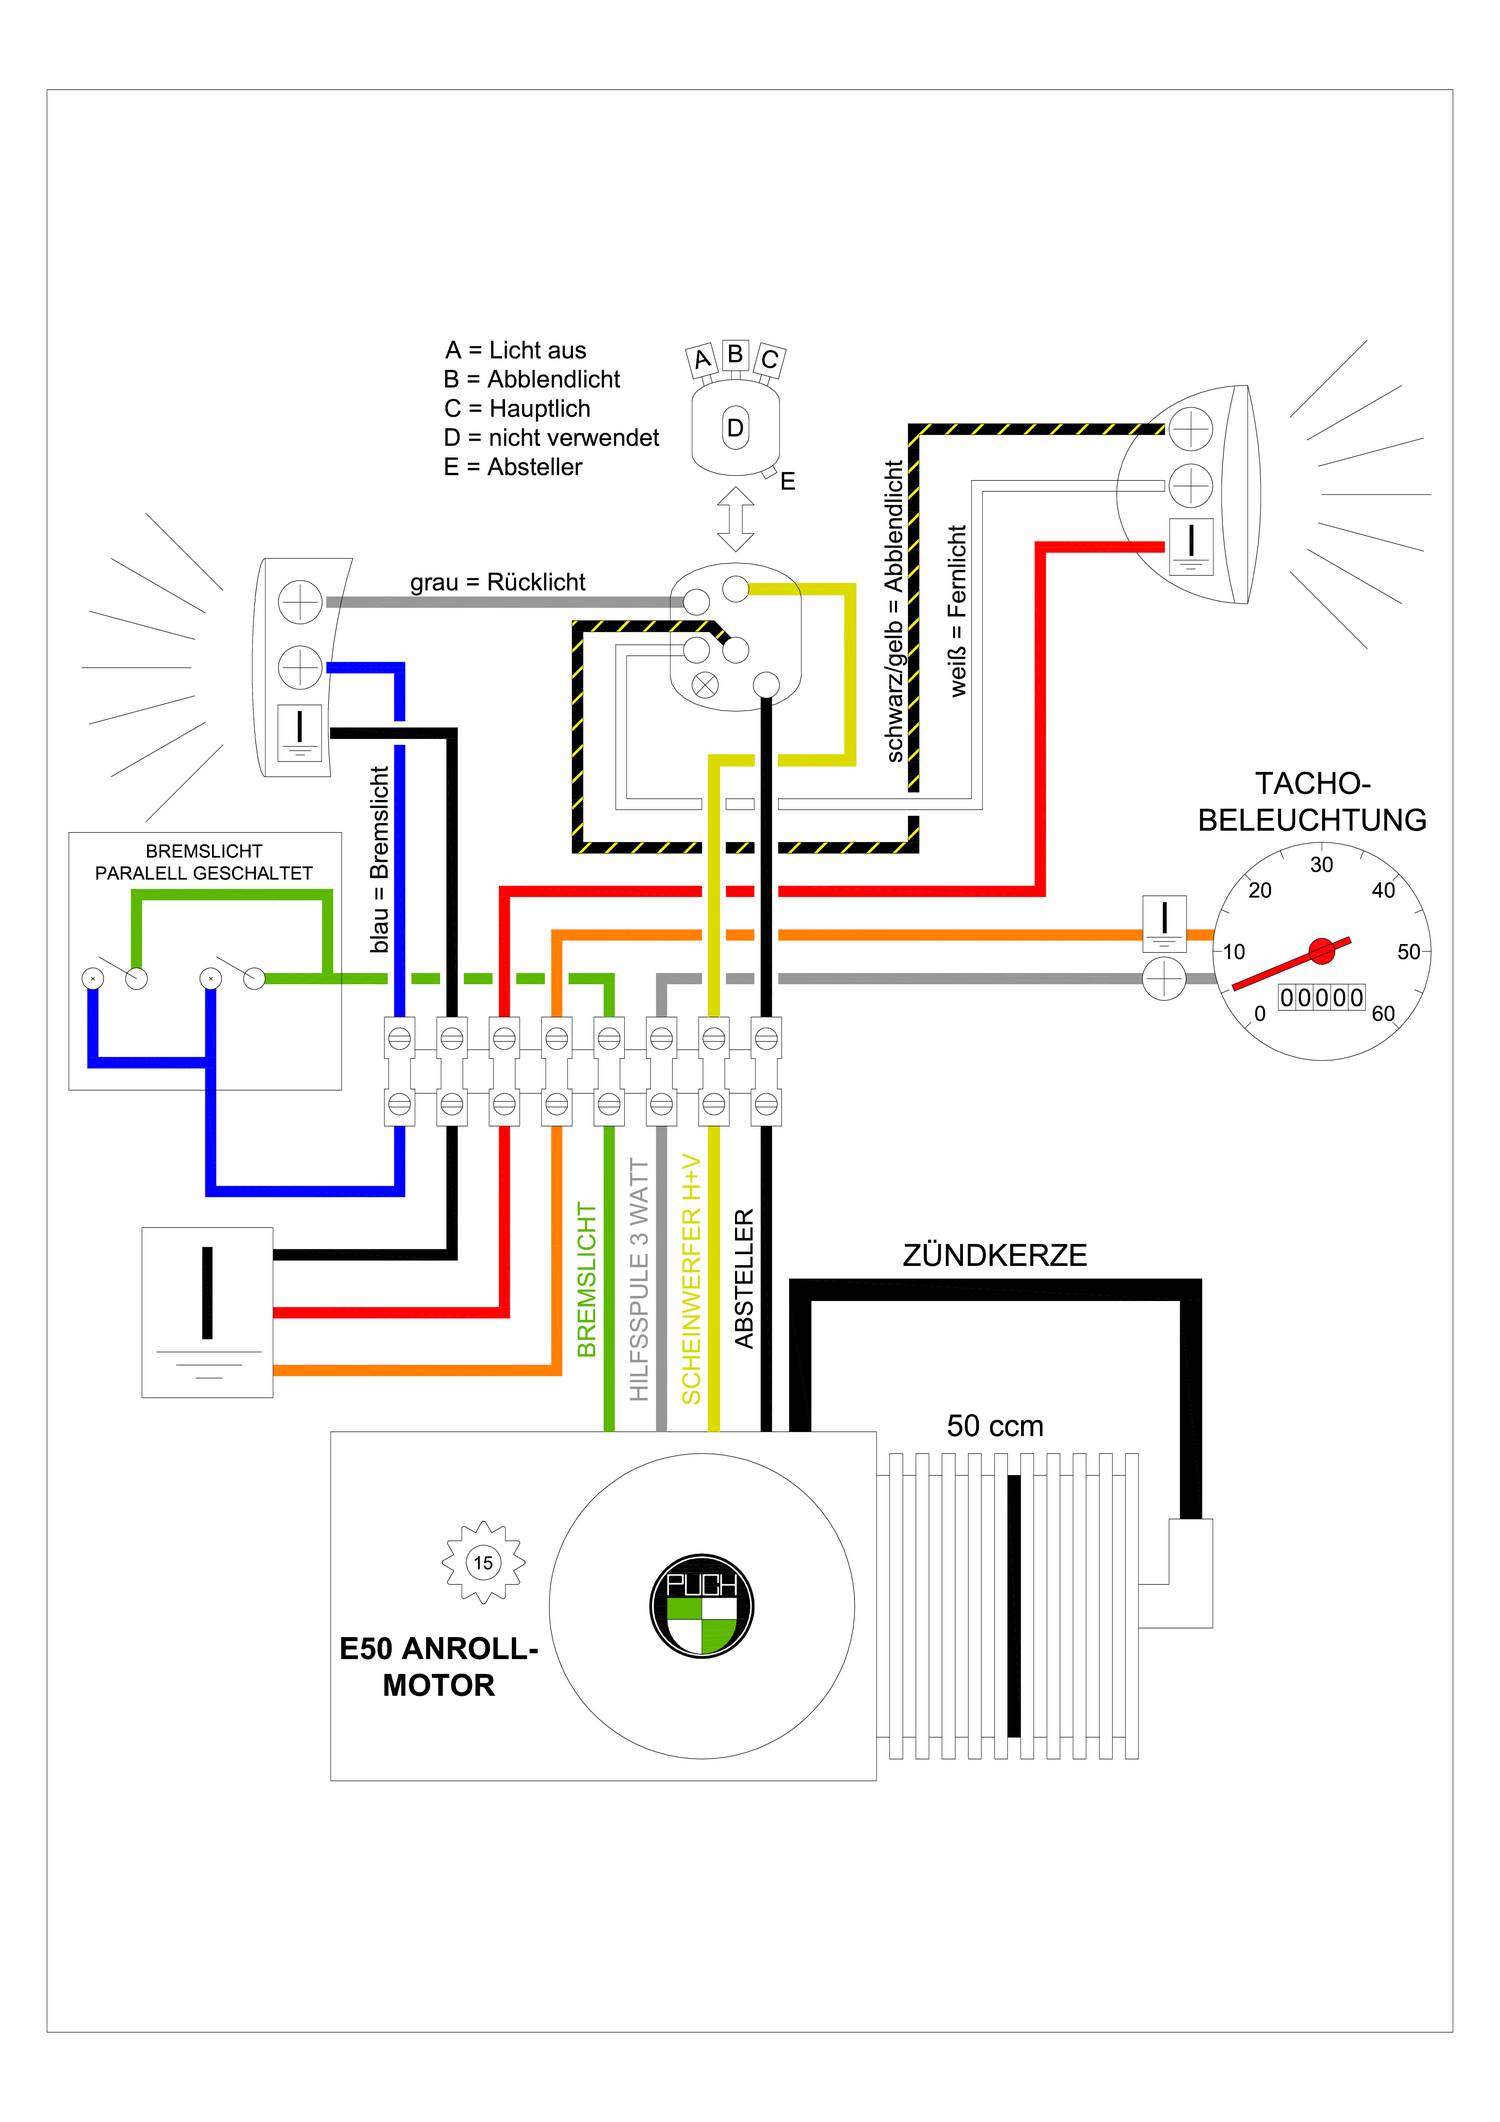 Genteq Motor Wiring Diagram from www.docdroid.net